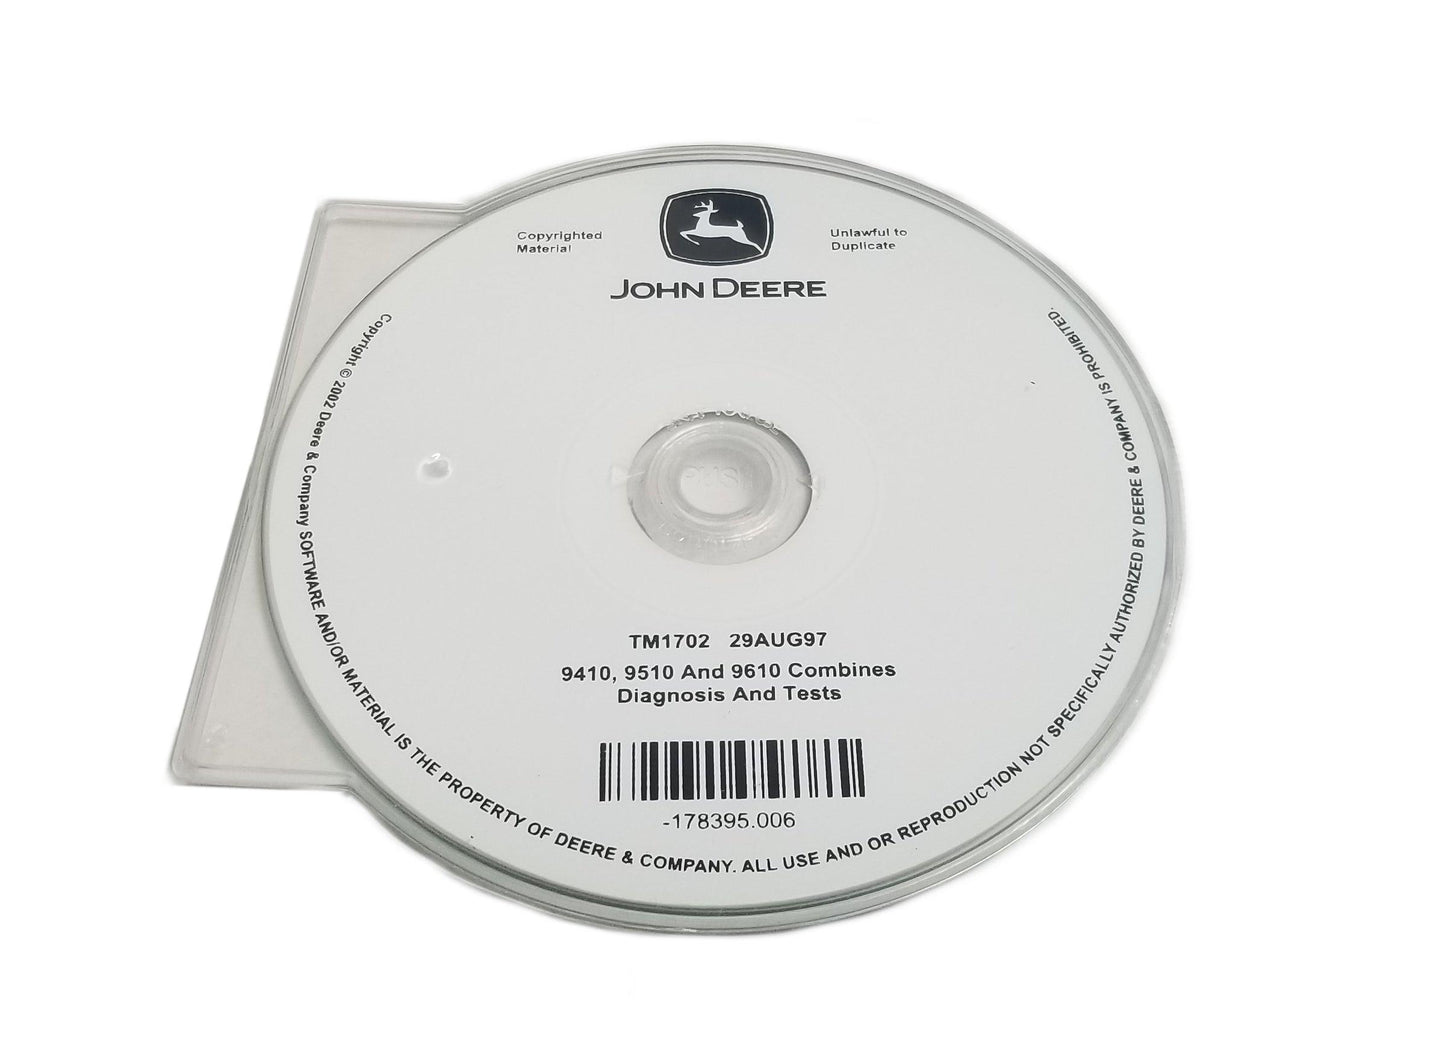 John Deere 9410/9510/9610 Combines Operation & Test Technical CD Manual - TM1702CD